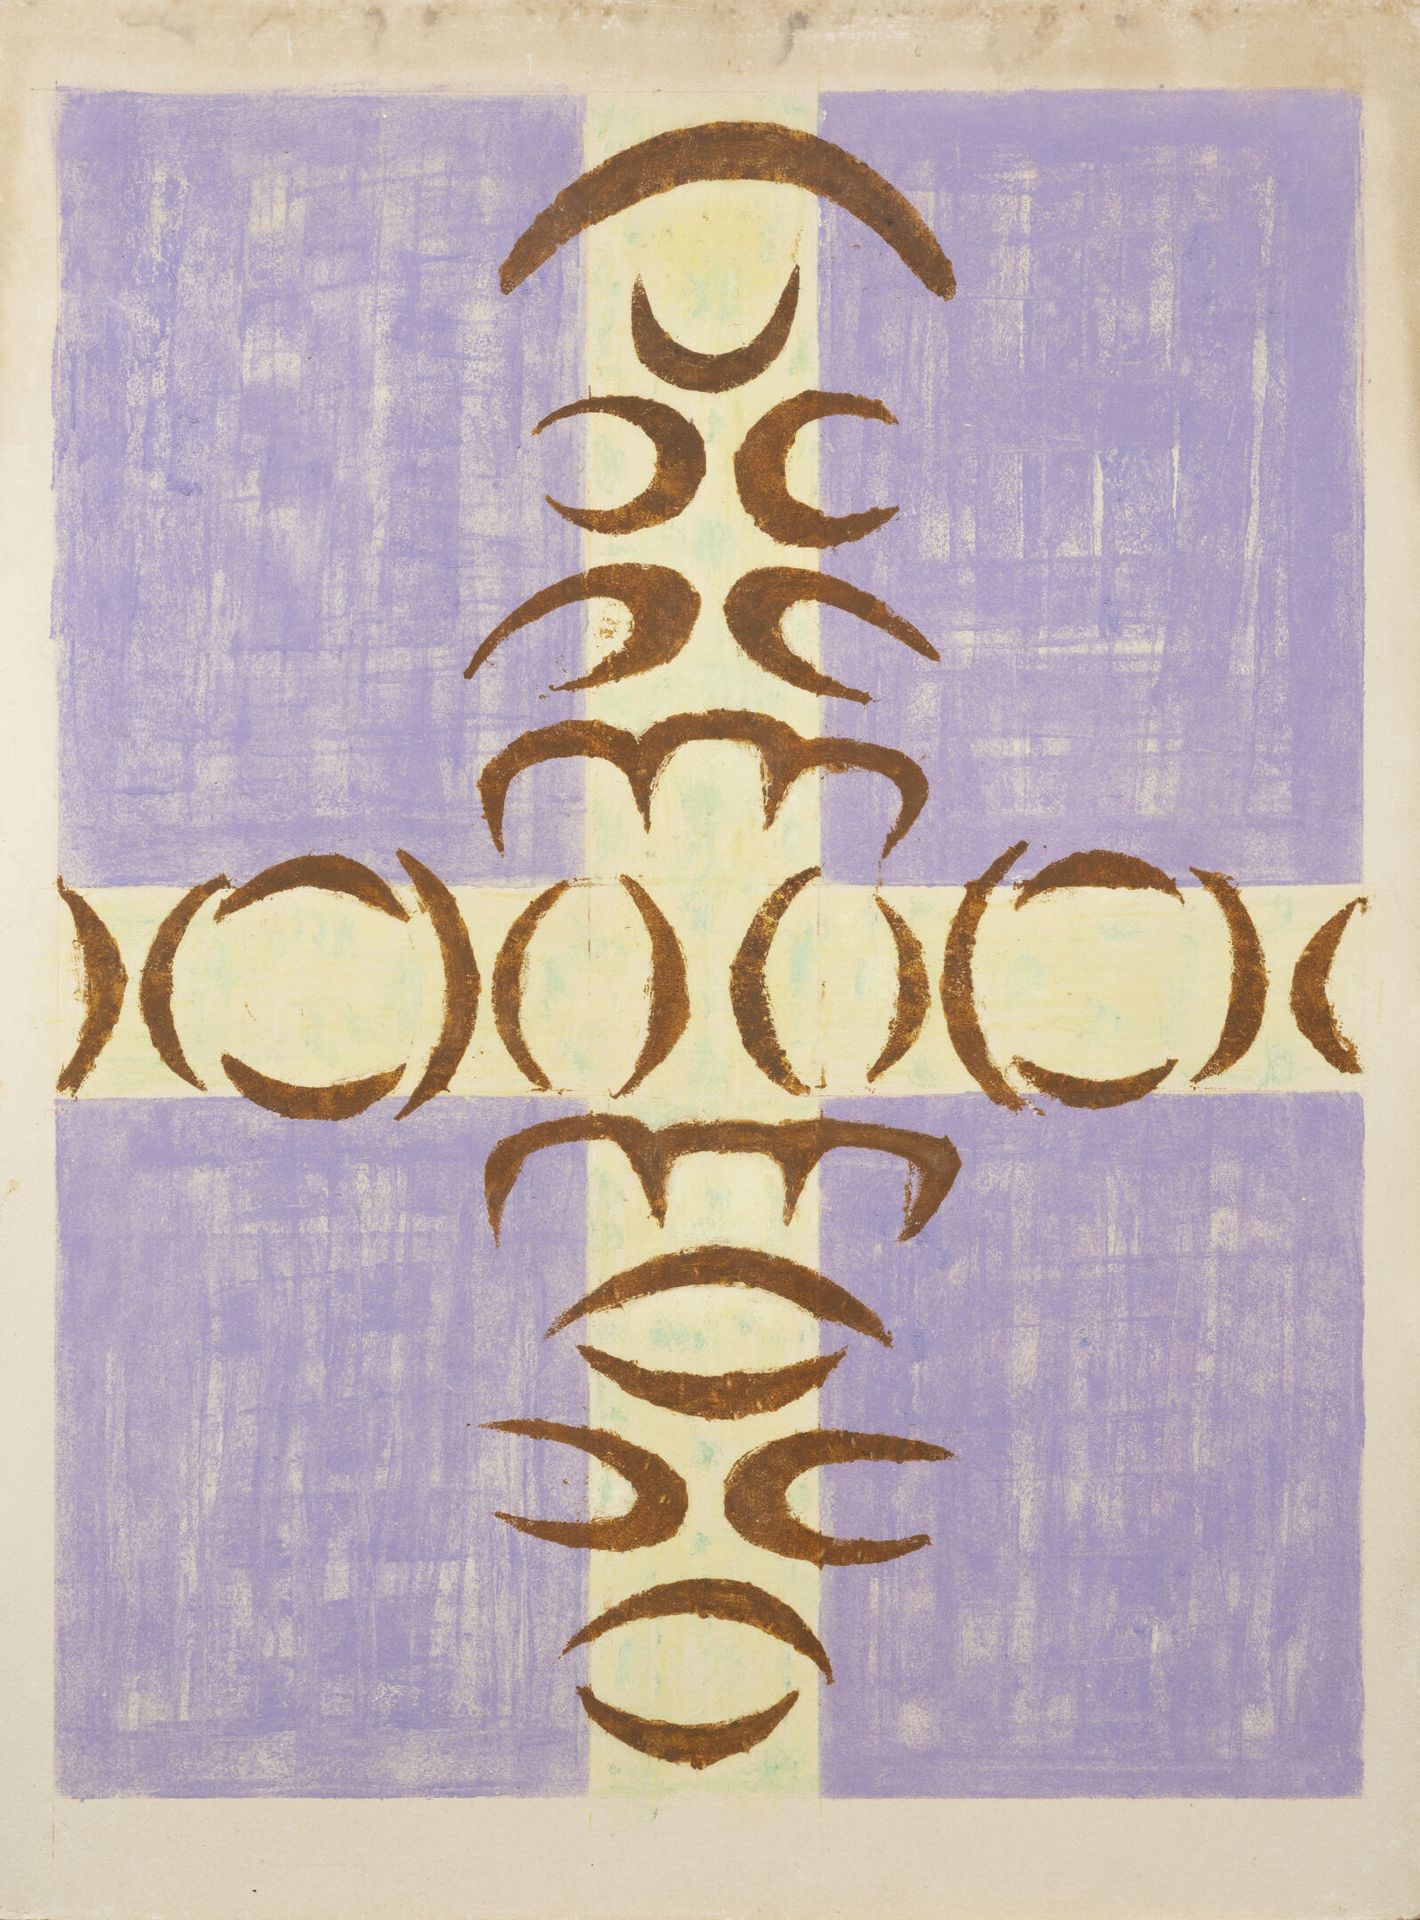 Jean LEGROS (1917-1981) 无题。
水粉画在isorel上。
无符号。
78.5 x 58.5厘米。
污点和湿气。
刮痕和缺损的边缘。